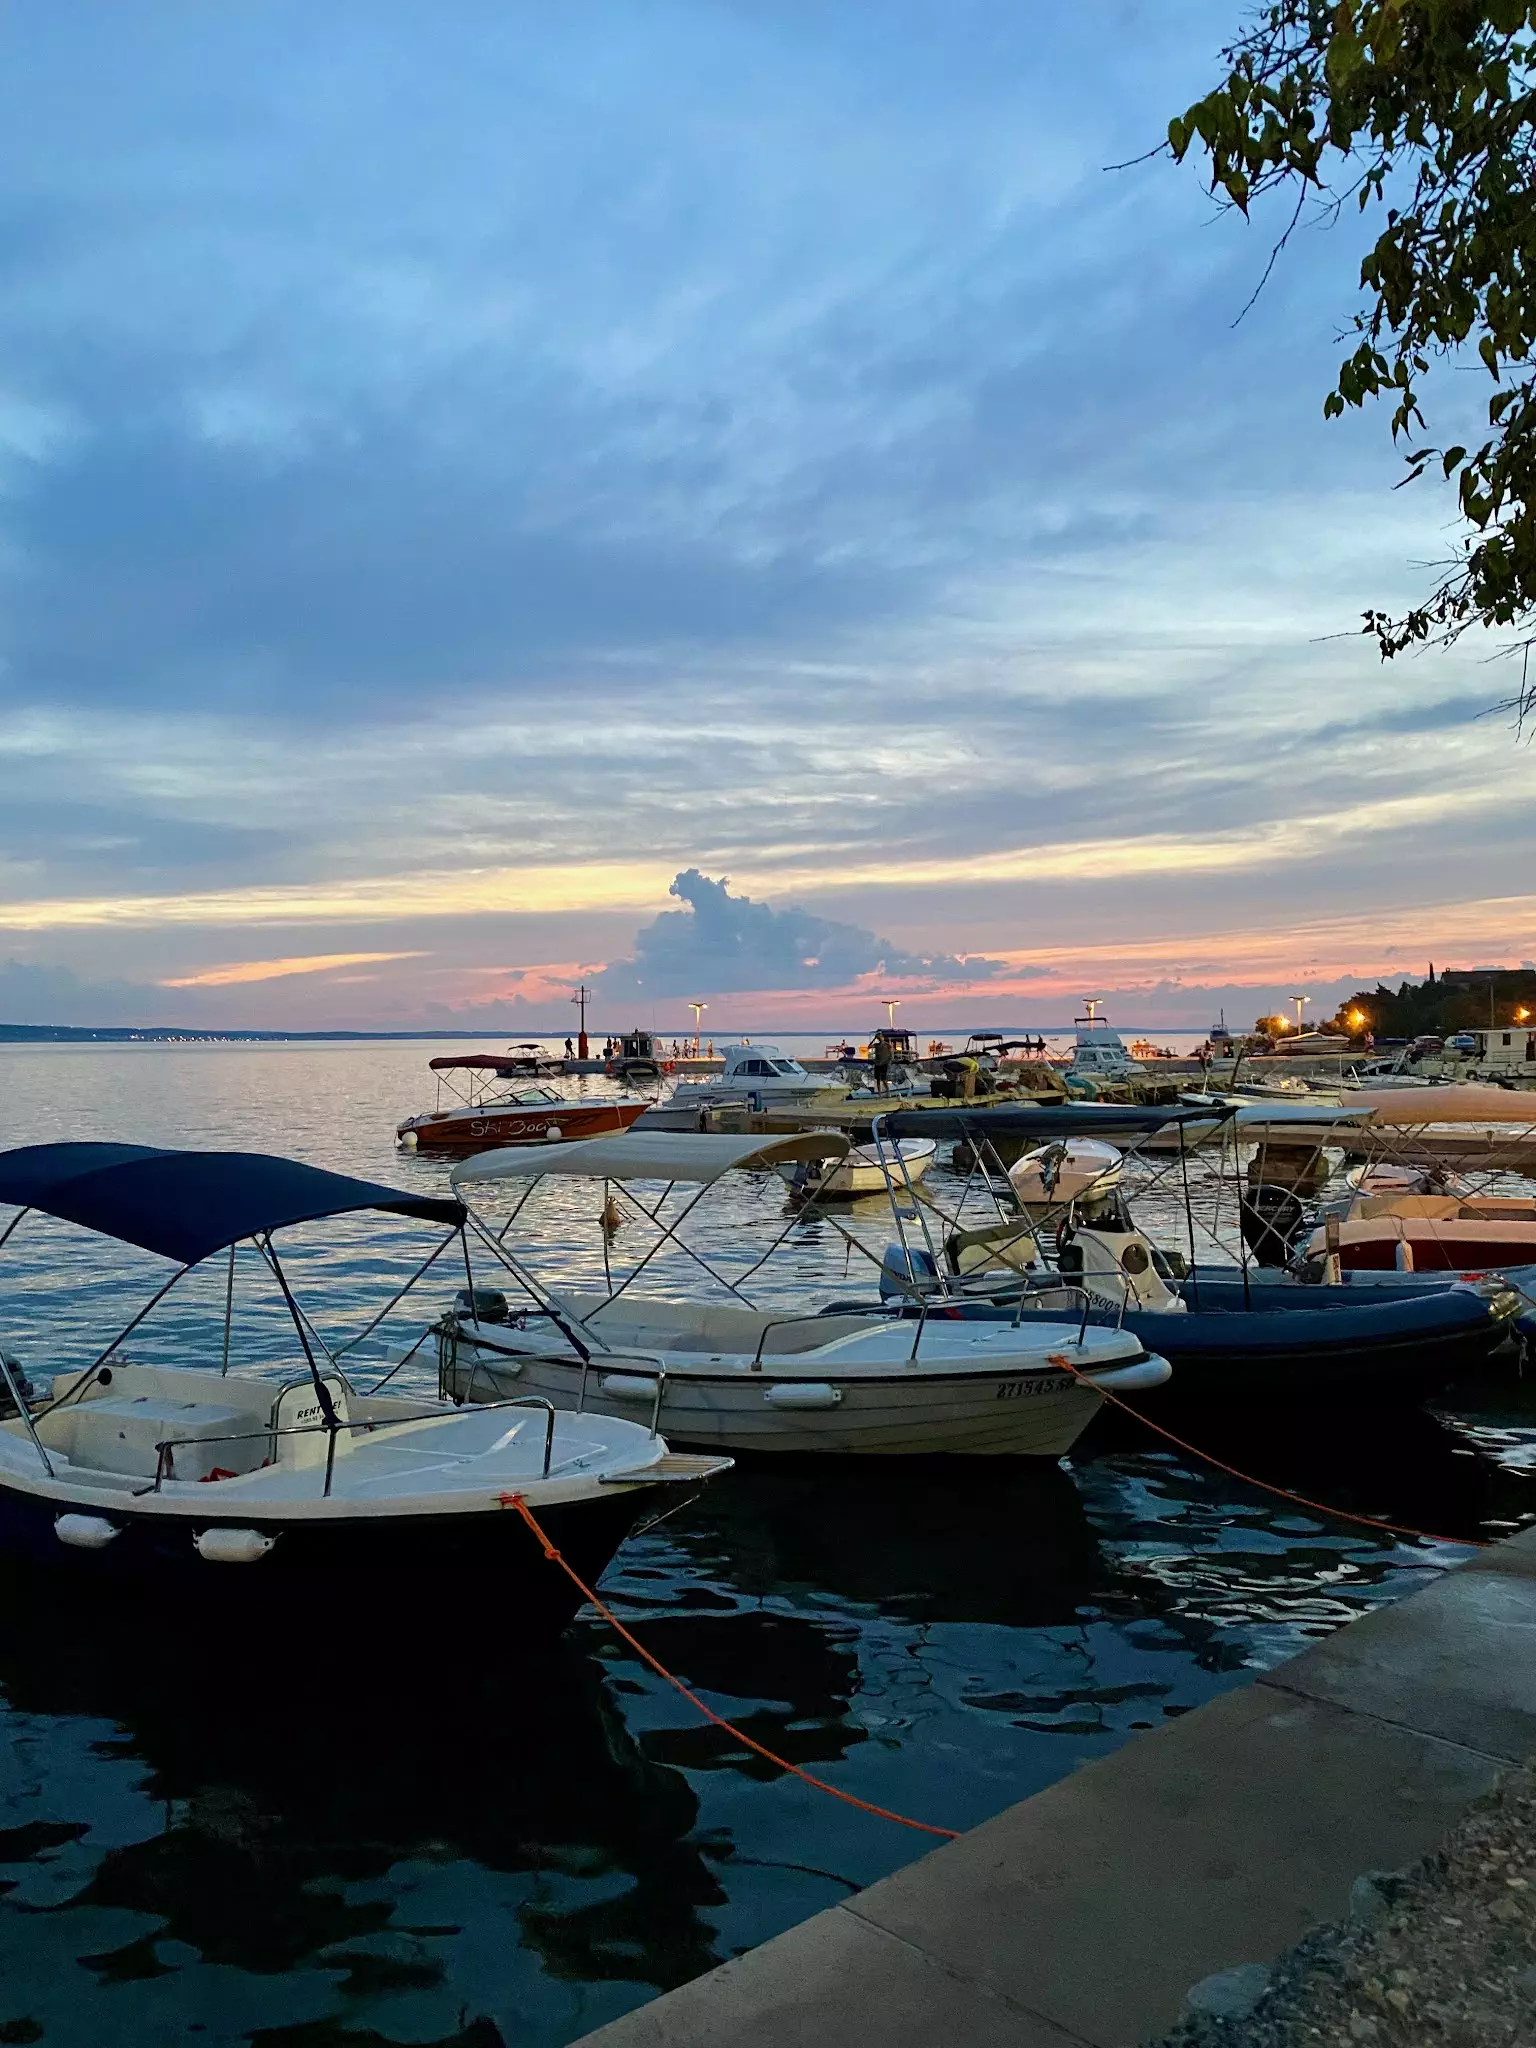 Sommerurlaub mit dem Womo in KROATIEN: Campingplatz Plantaza in Starigrad direkt am Meer! Kroatien Vlog Nr. 2